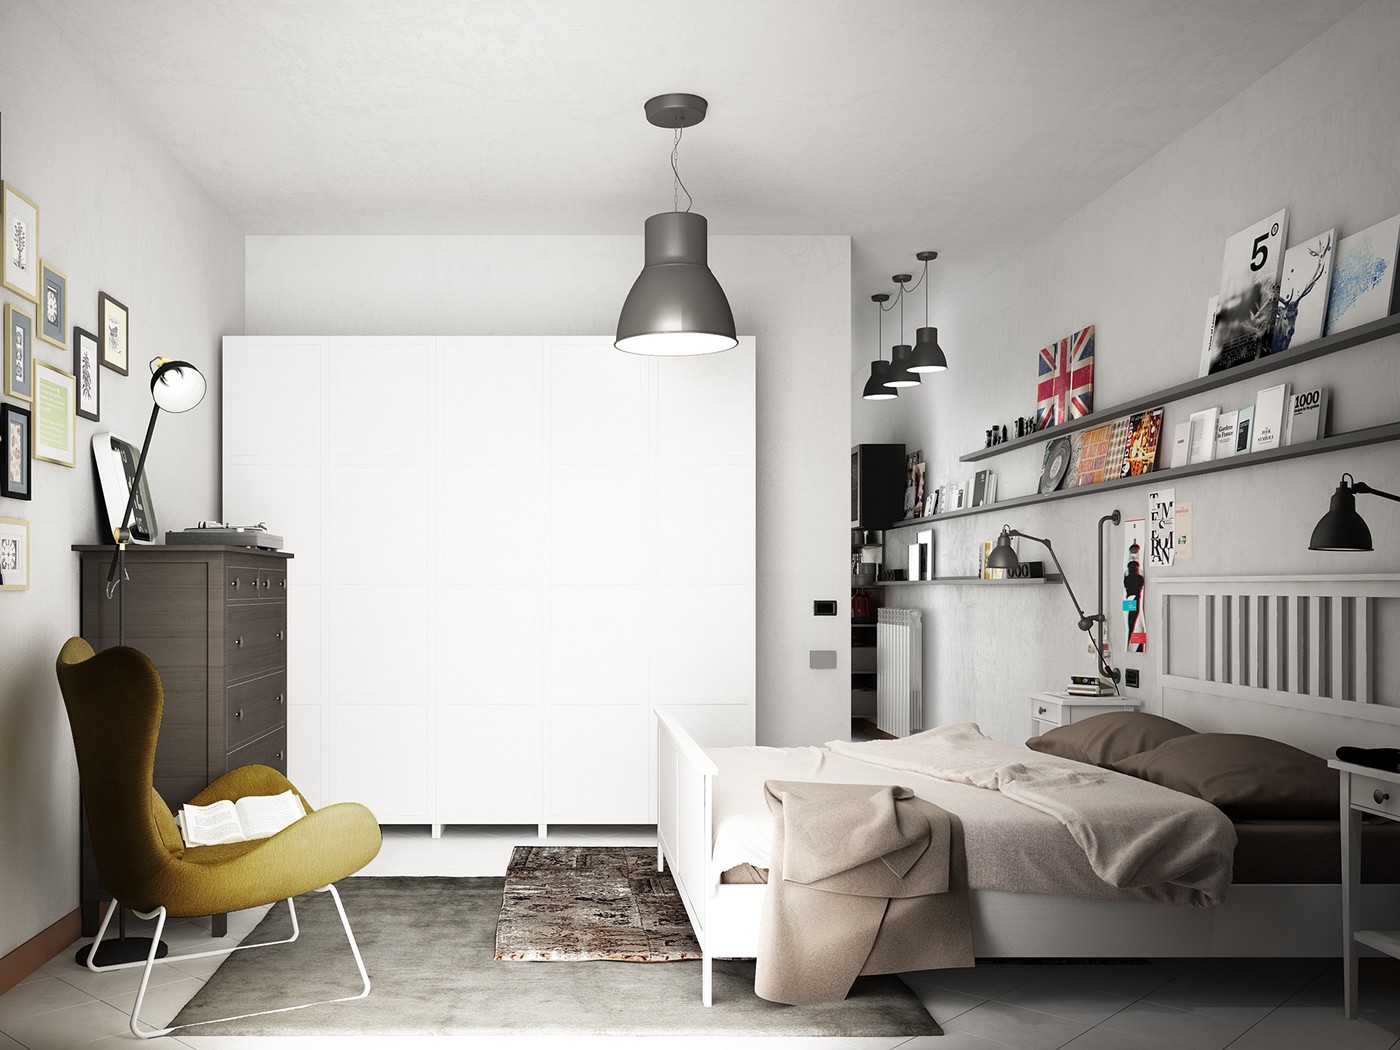 Interior design kitchen bedroom Render vray mood blackboard home